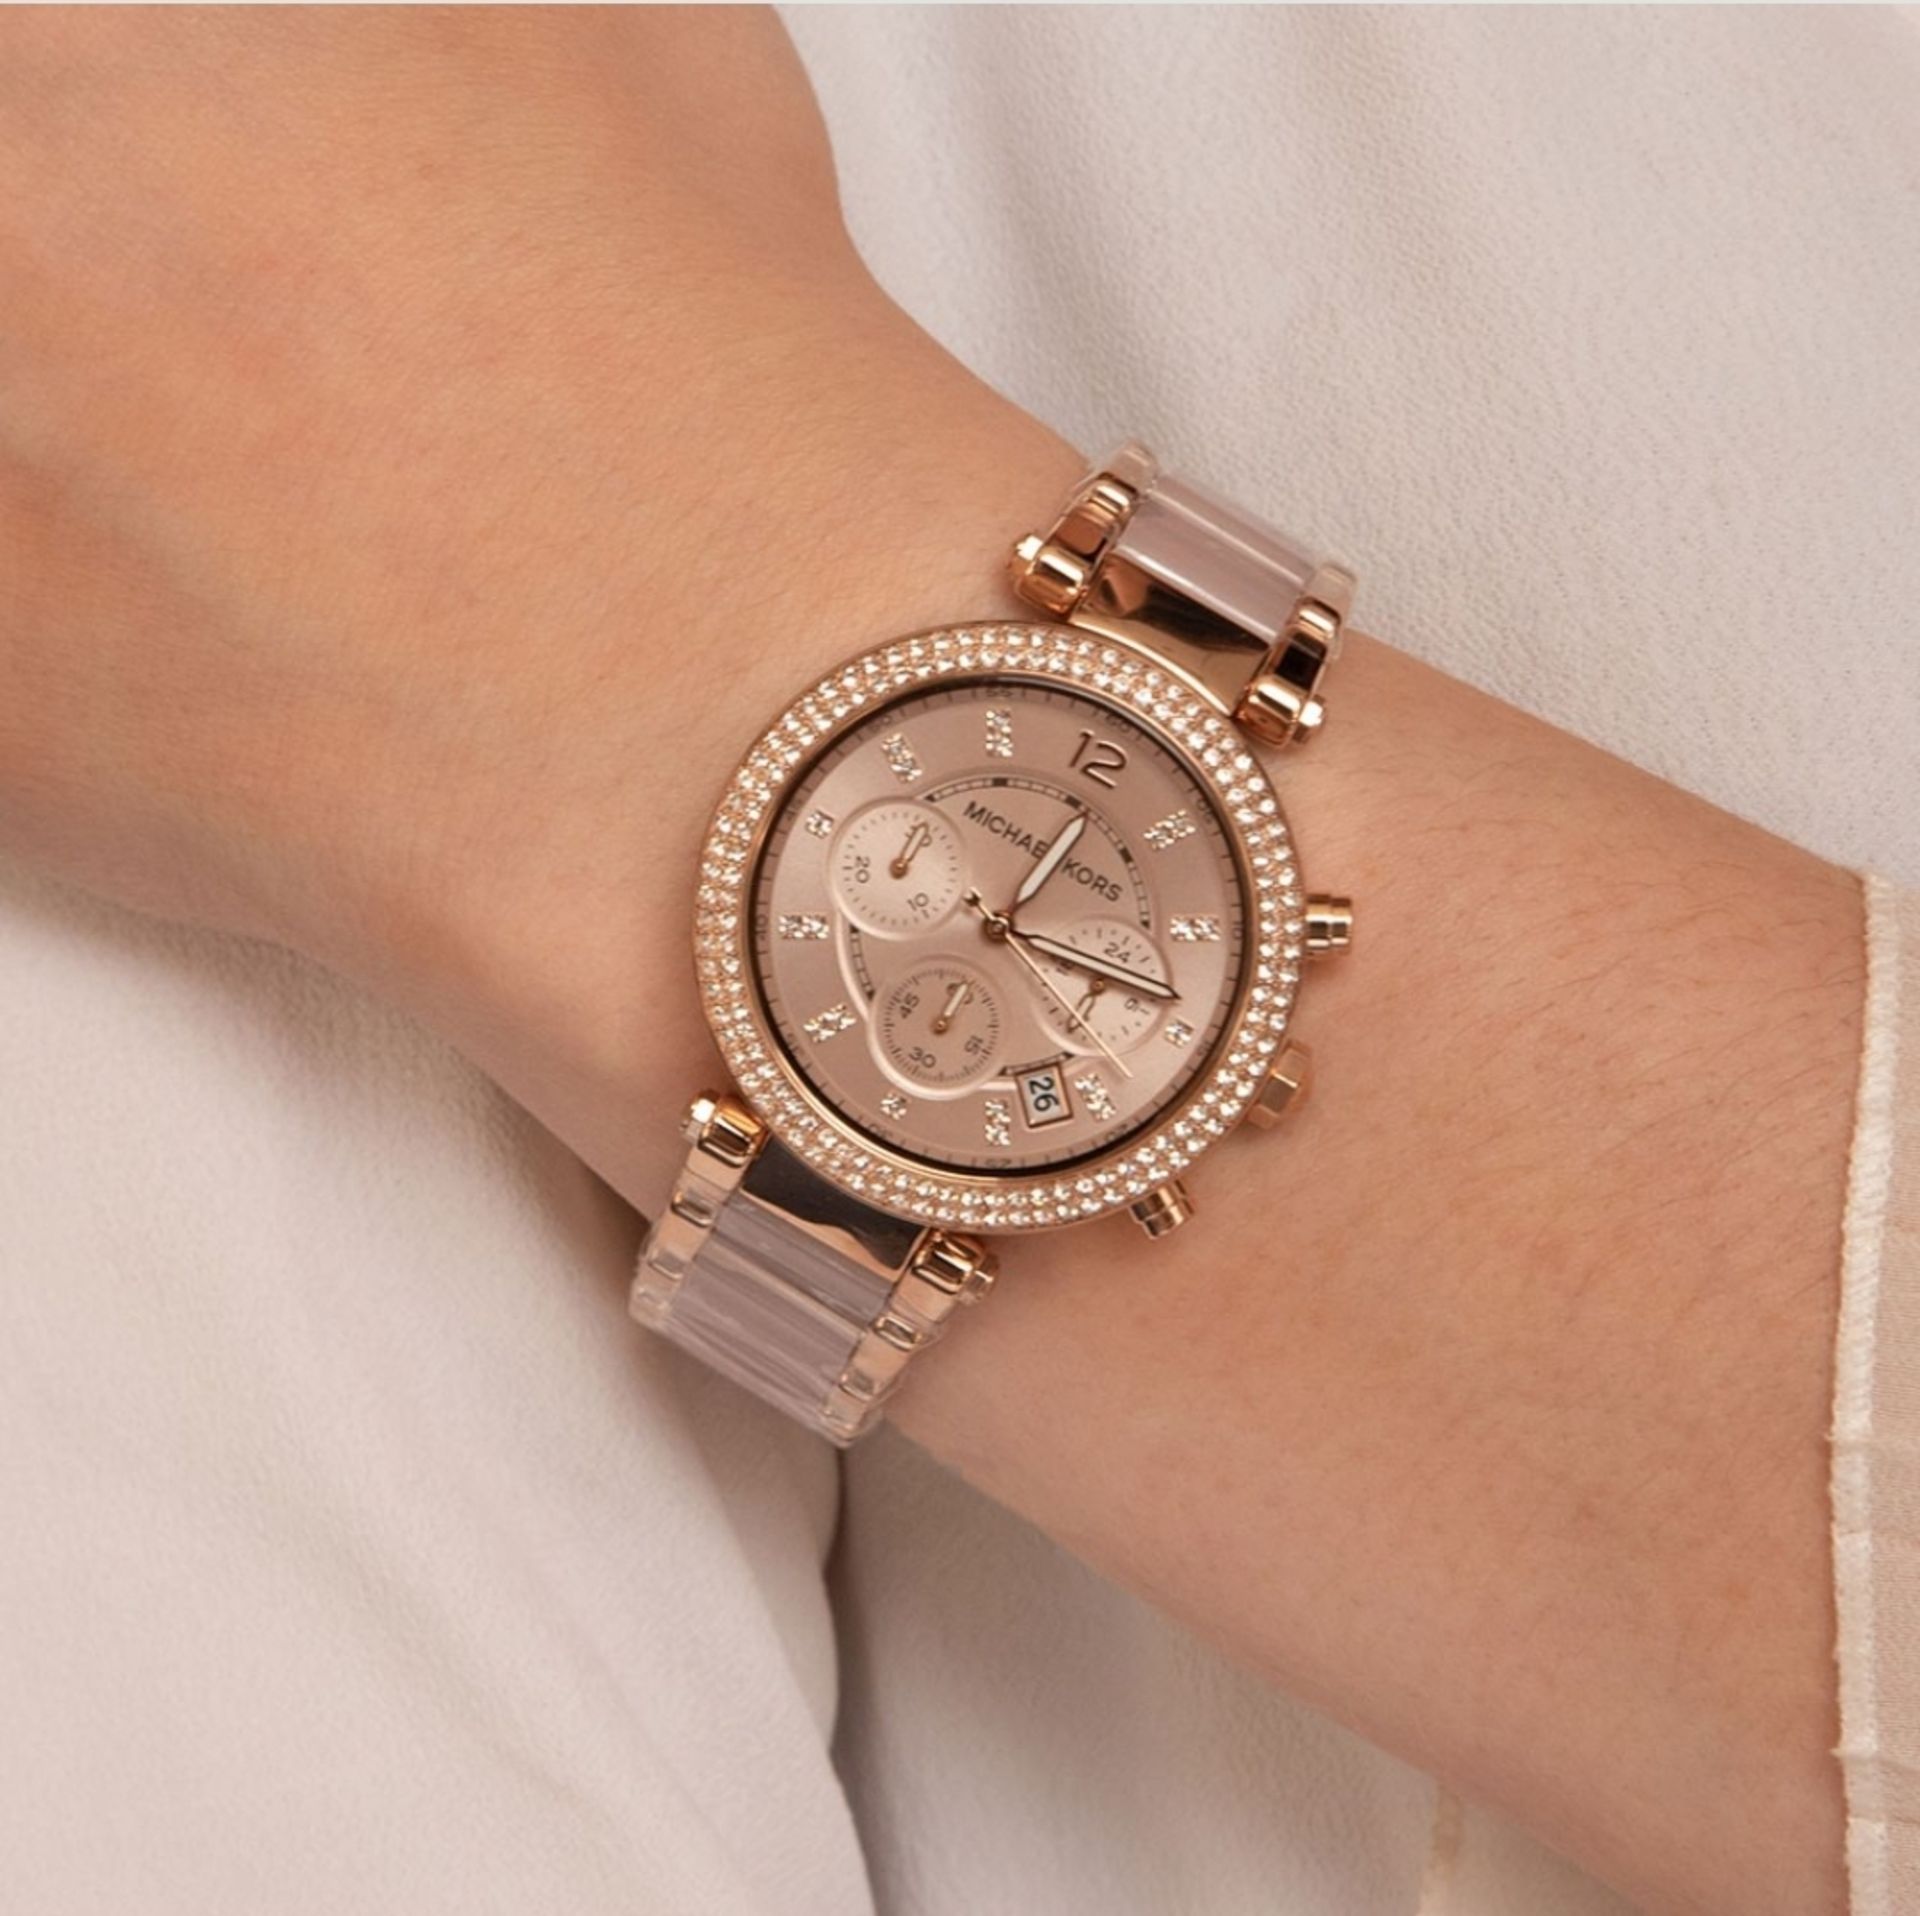 Michael Kors MK5896 Ladies Parker Rose Gold Chronograph Watch - Image 2 of 7